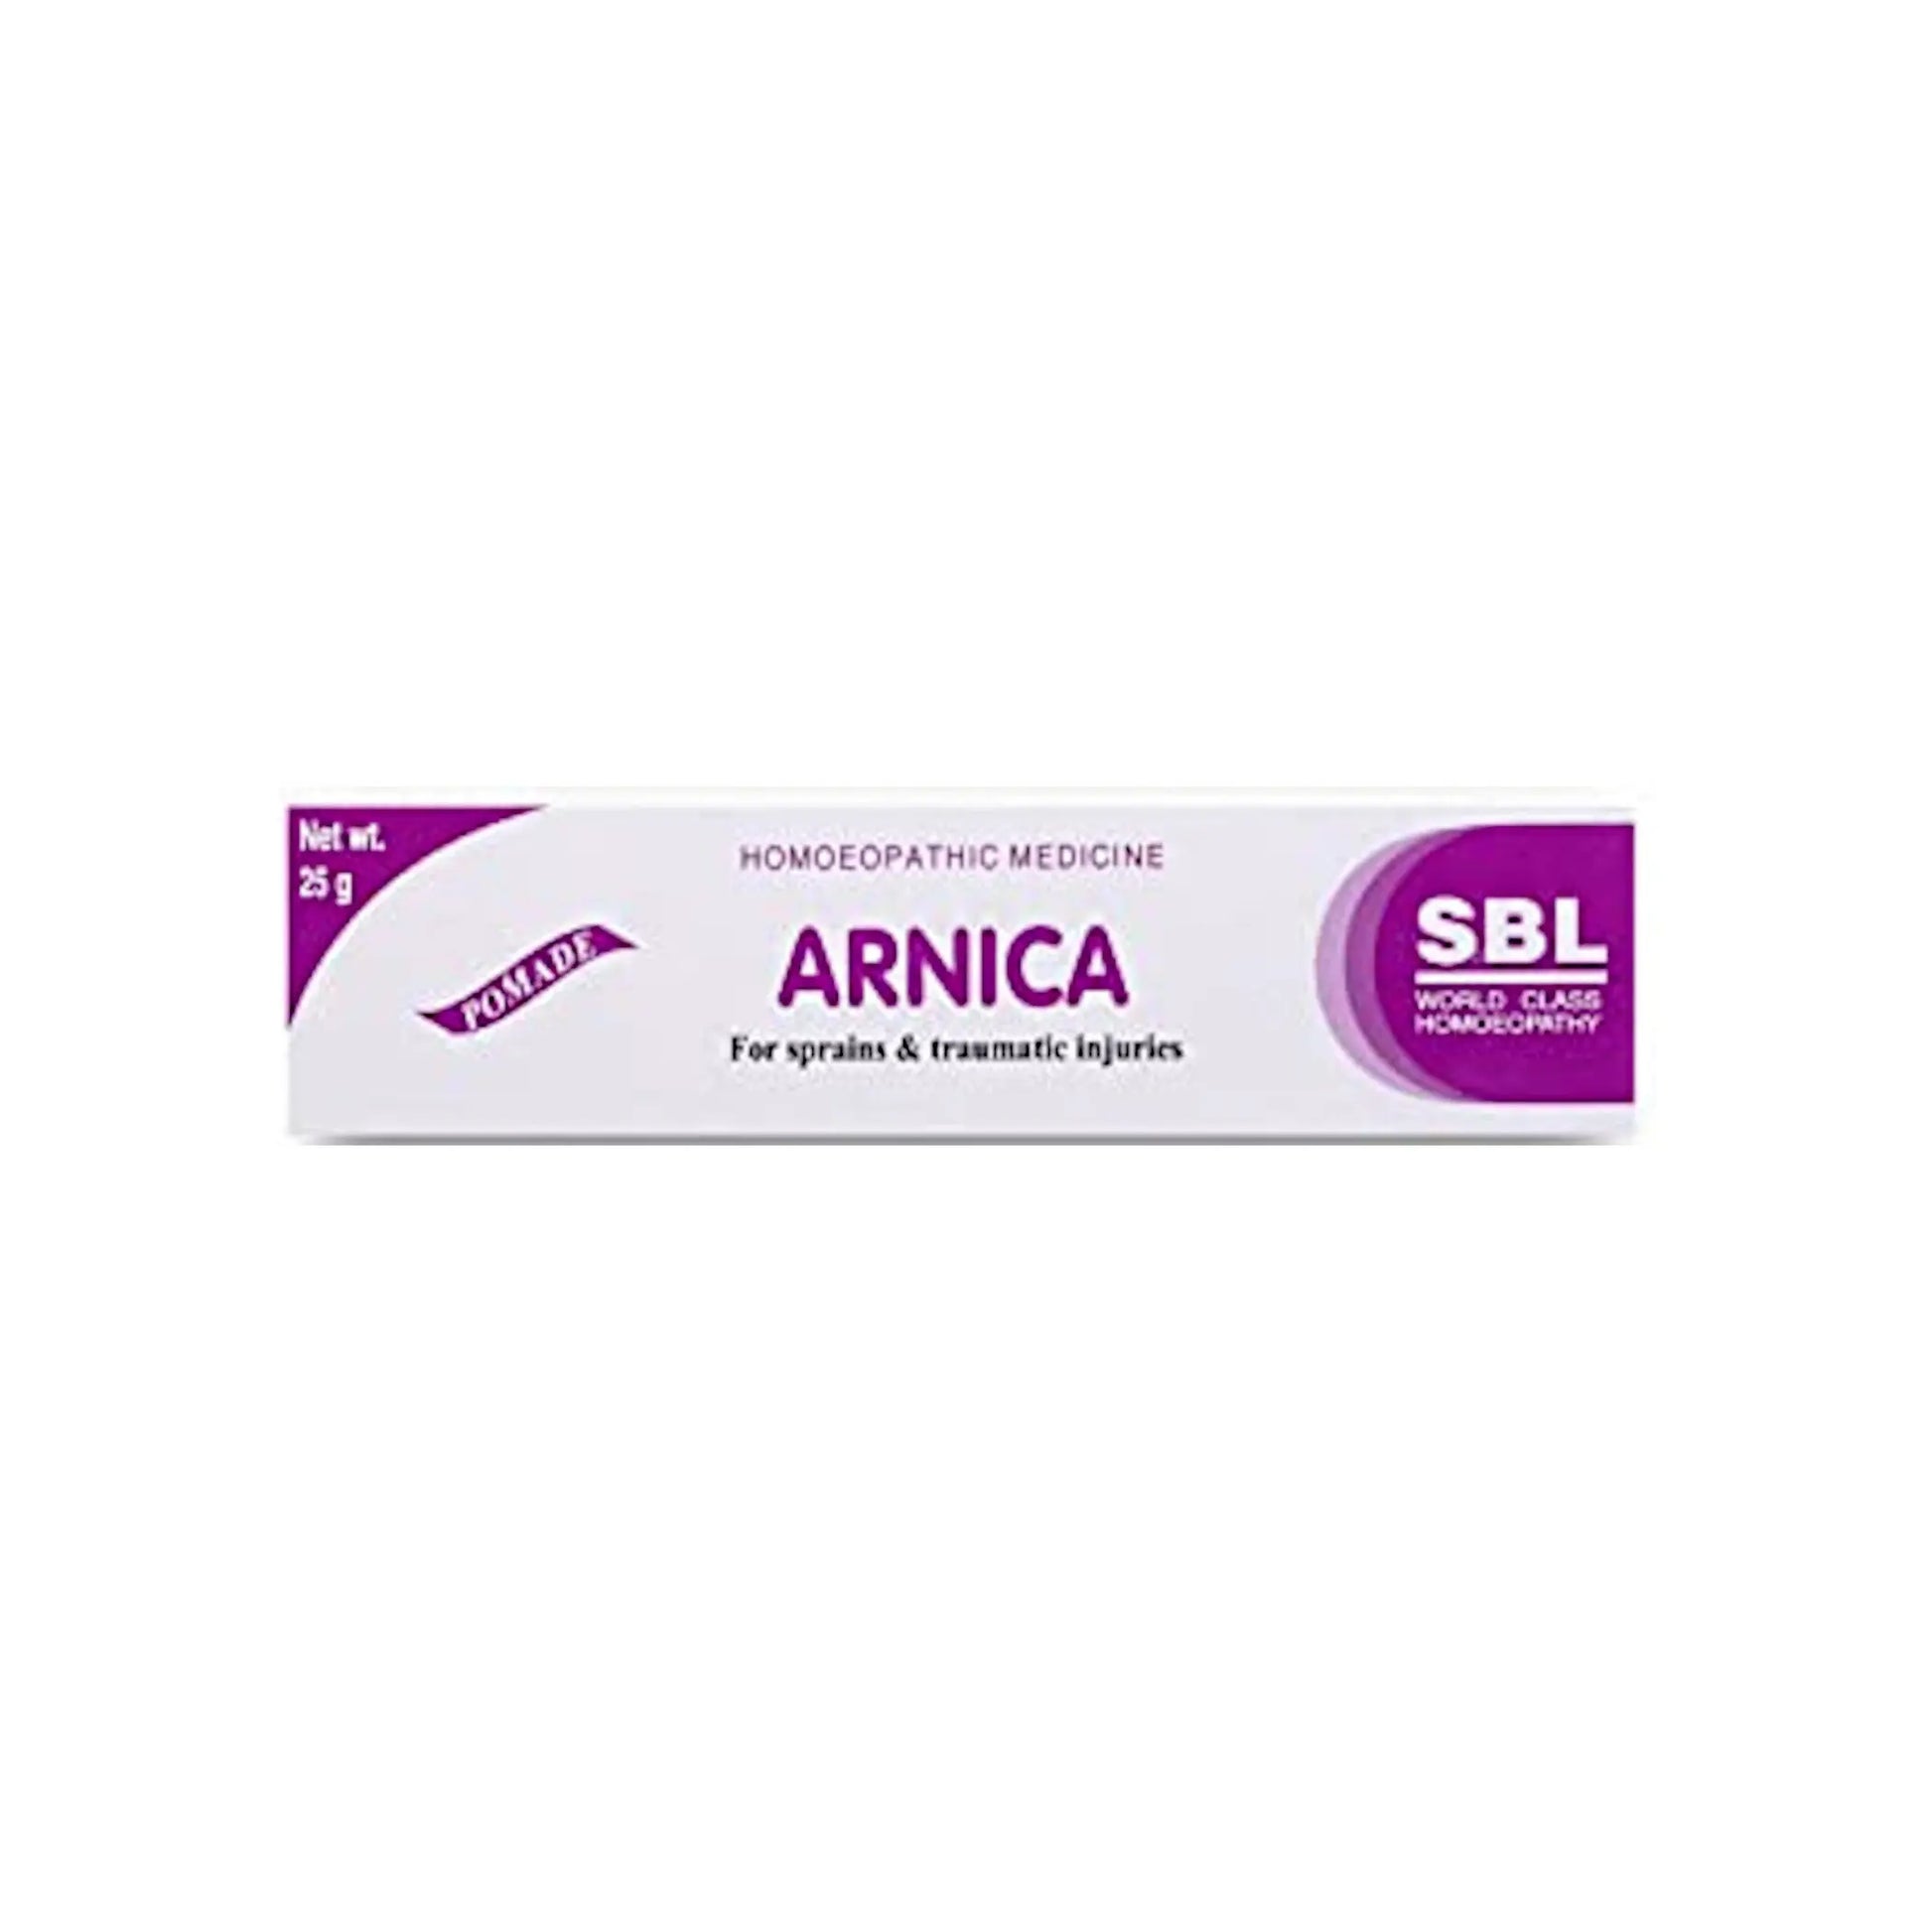 SBL Homeopathy - Arnica Cream 25 g - my-ayurvedic